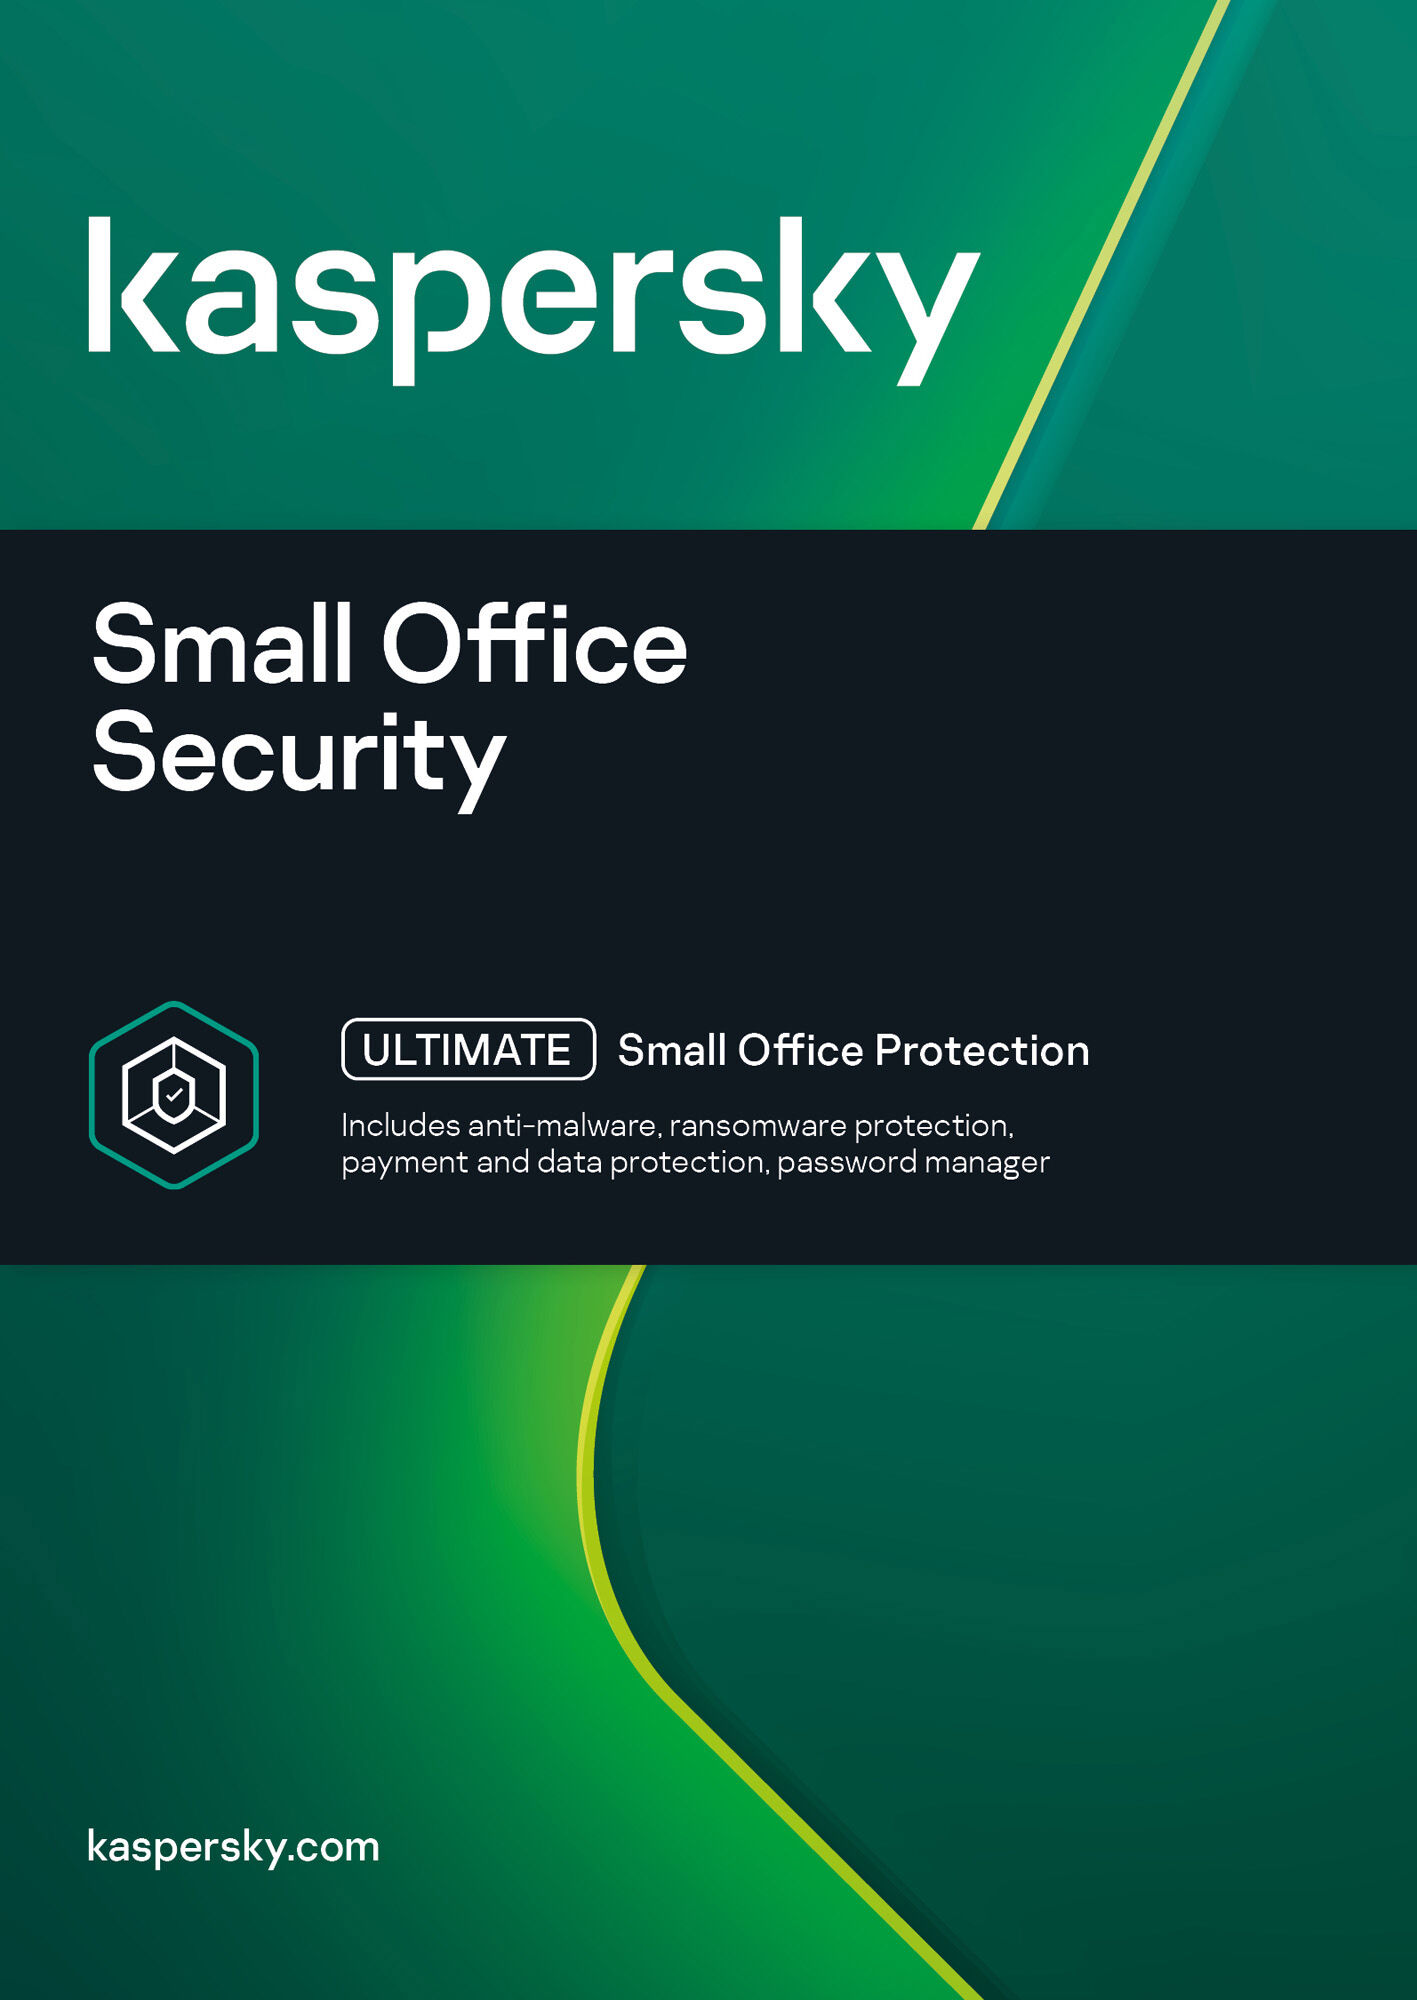 Kasperskyâ„¢ Small Office Security